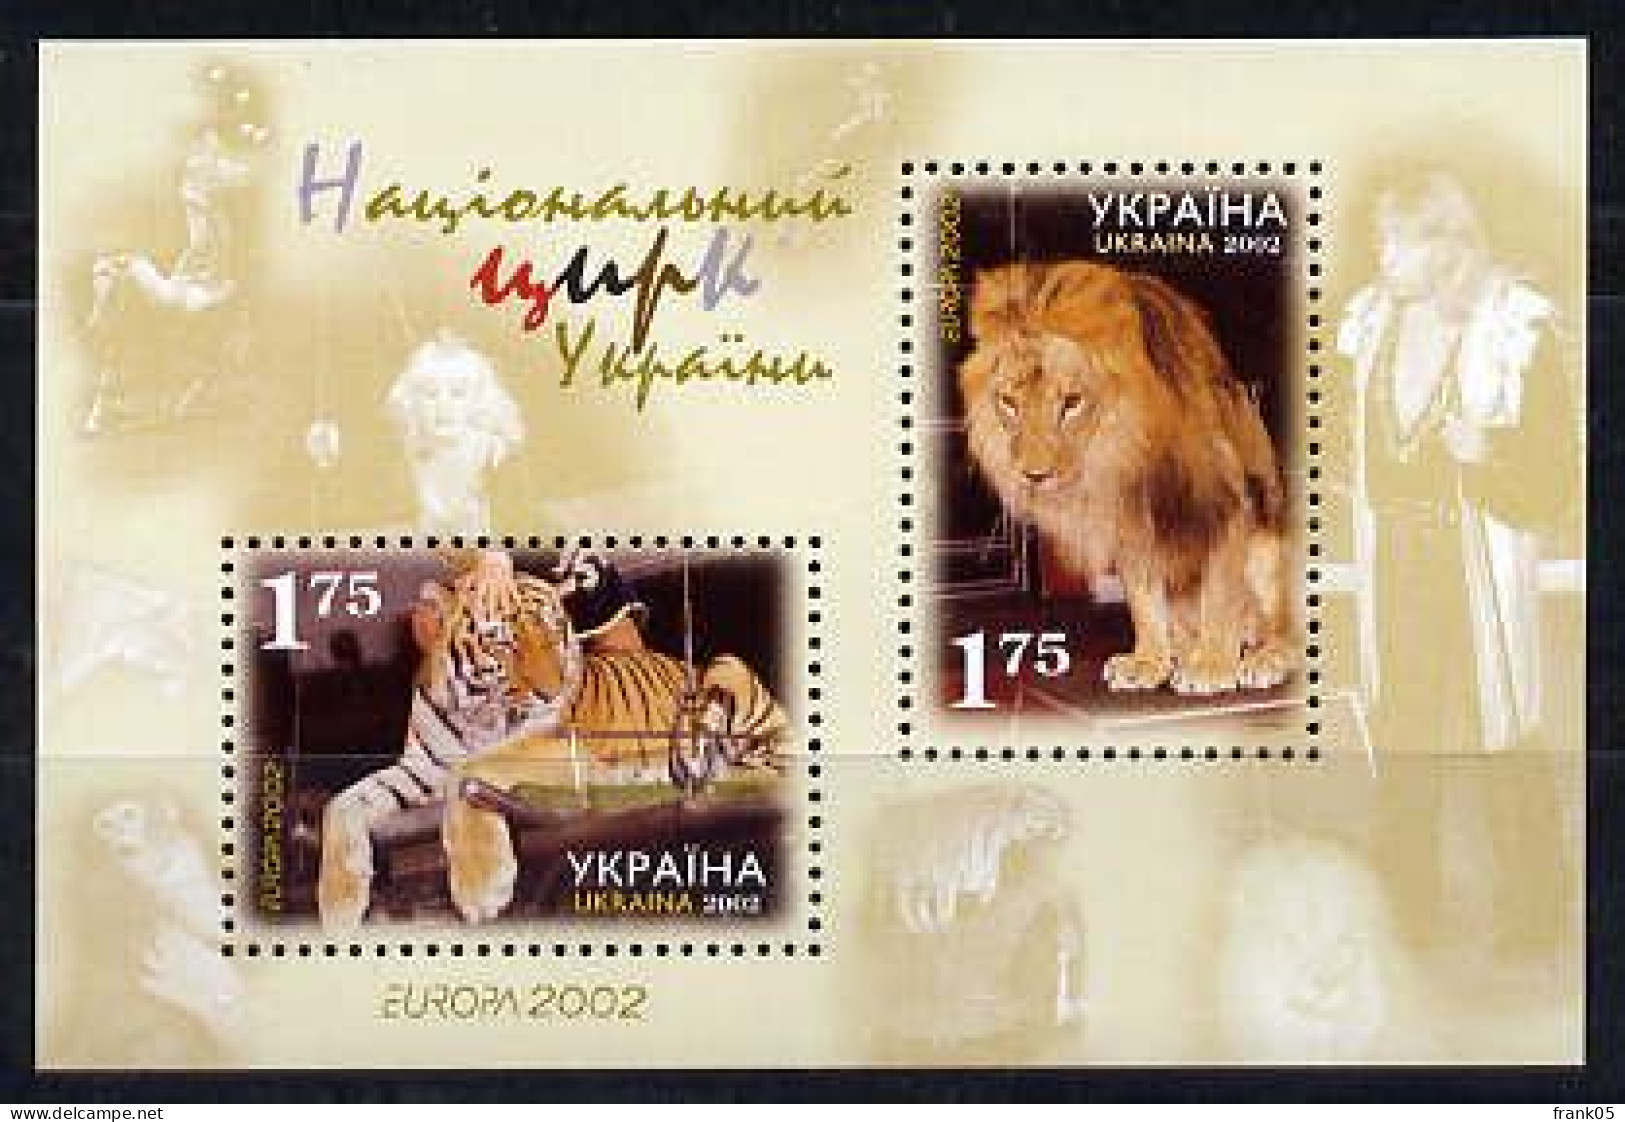 Ukraine 2002 Block / Souvenir Sheet EUROPA ** - 2002